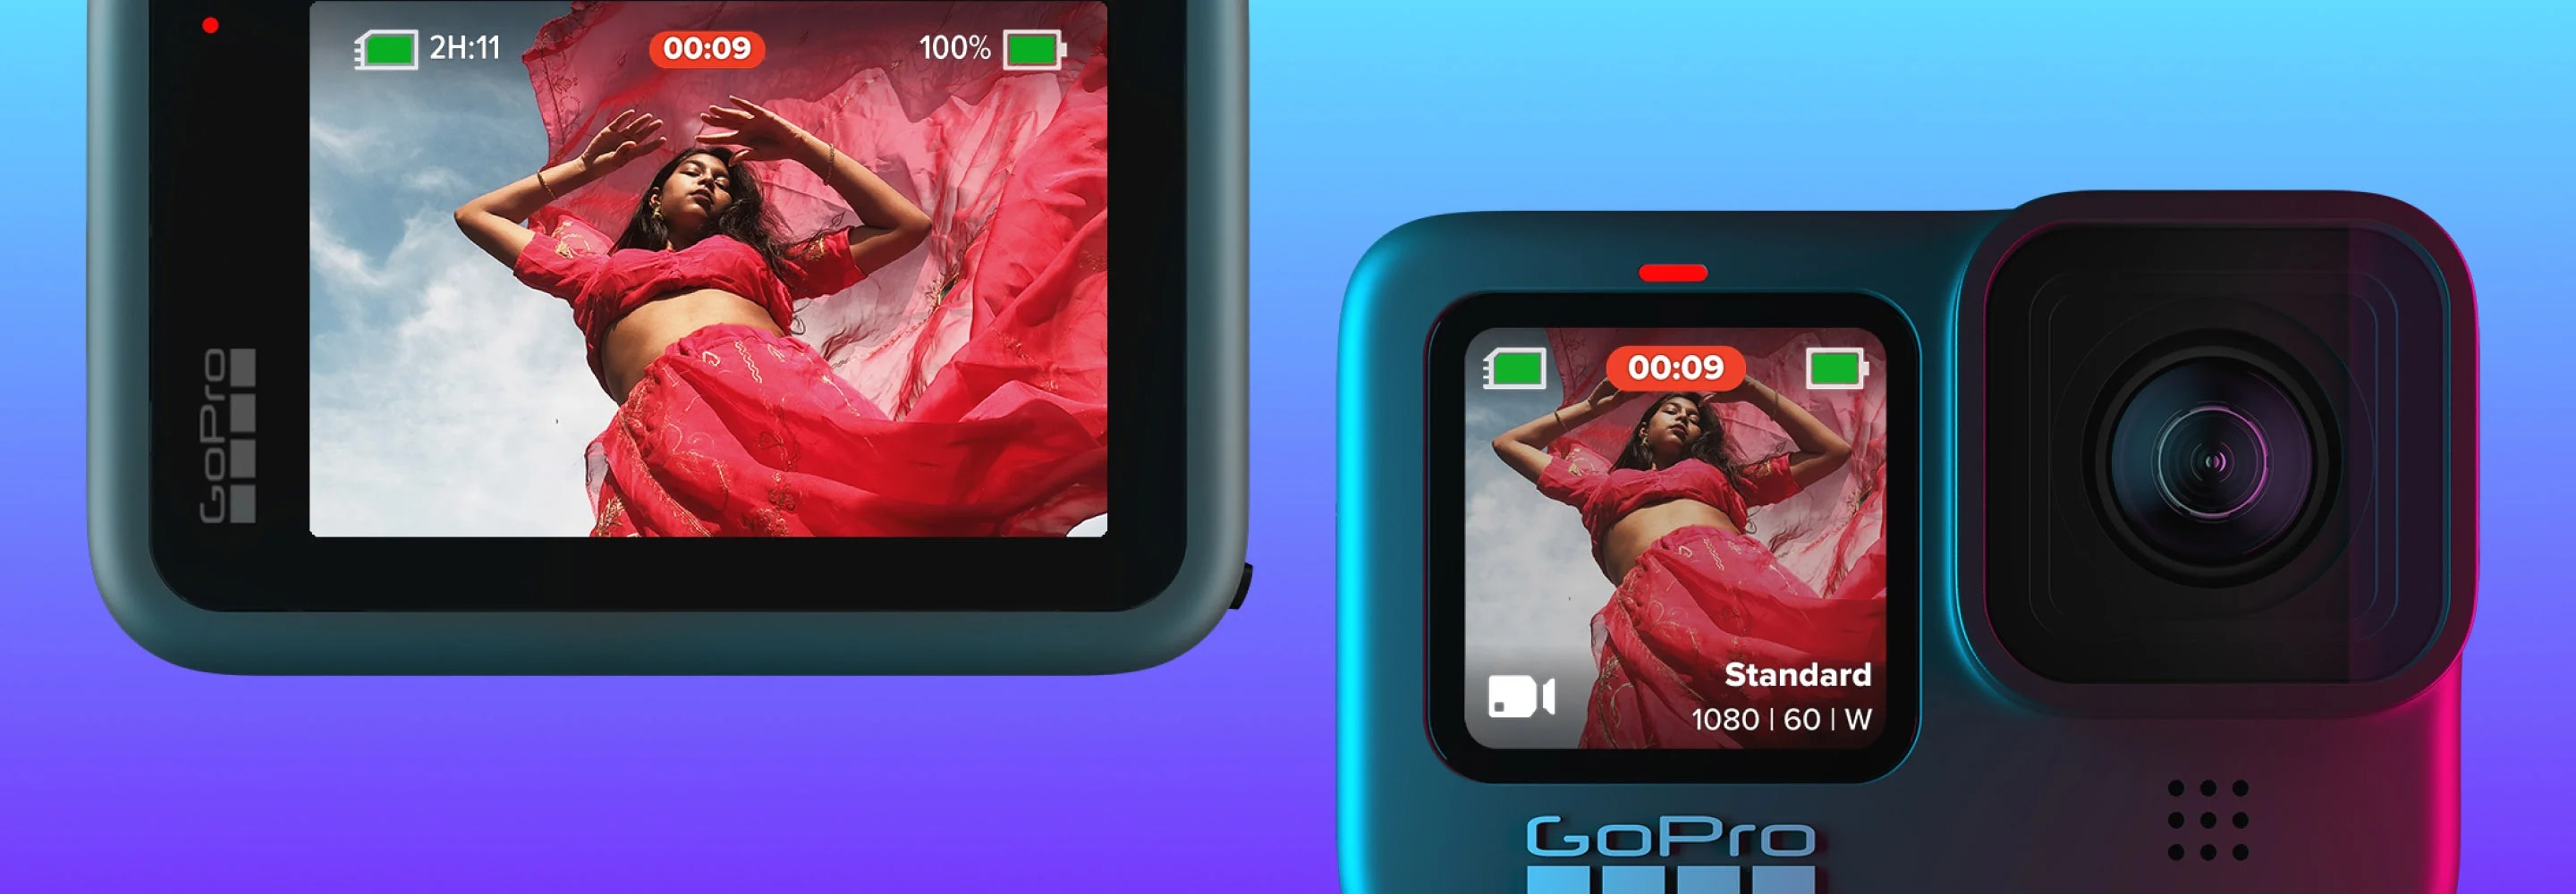 Gopro HERO9 Black ゴープロ ヒーロー9 ブラック アクションカメラ ウェアラブルカメラ ビデオ 防水 CHDHX-901-FW